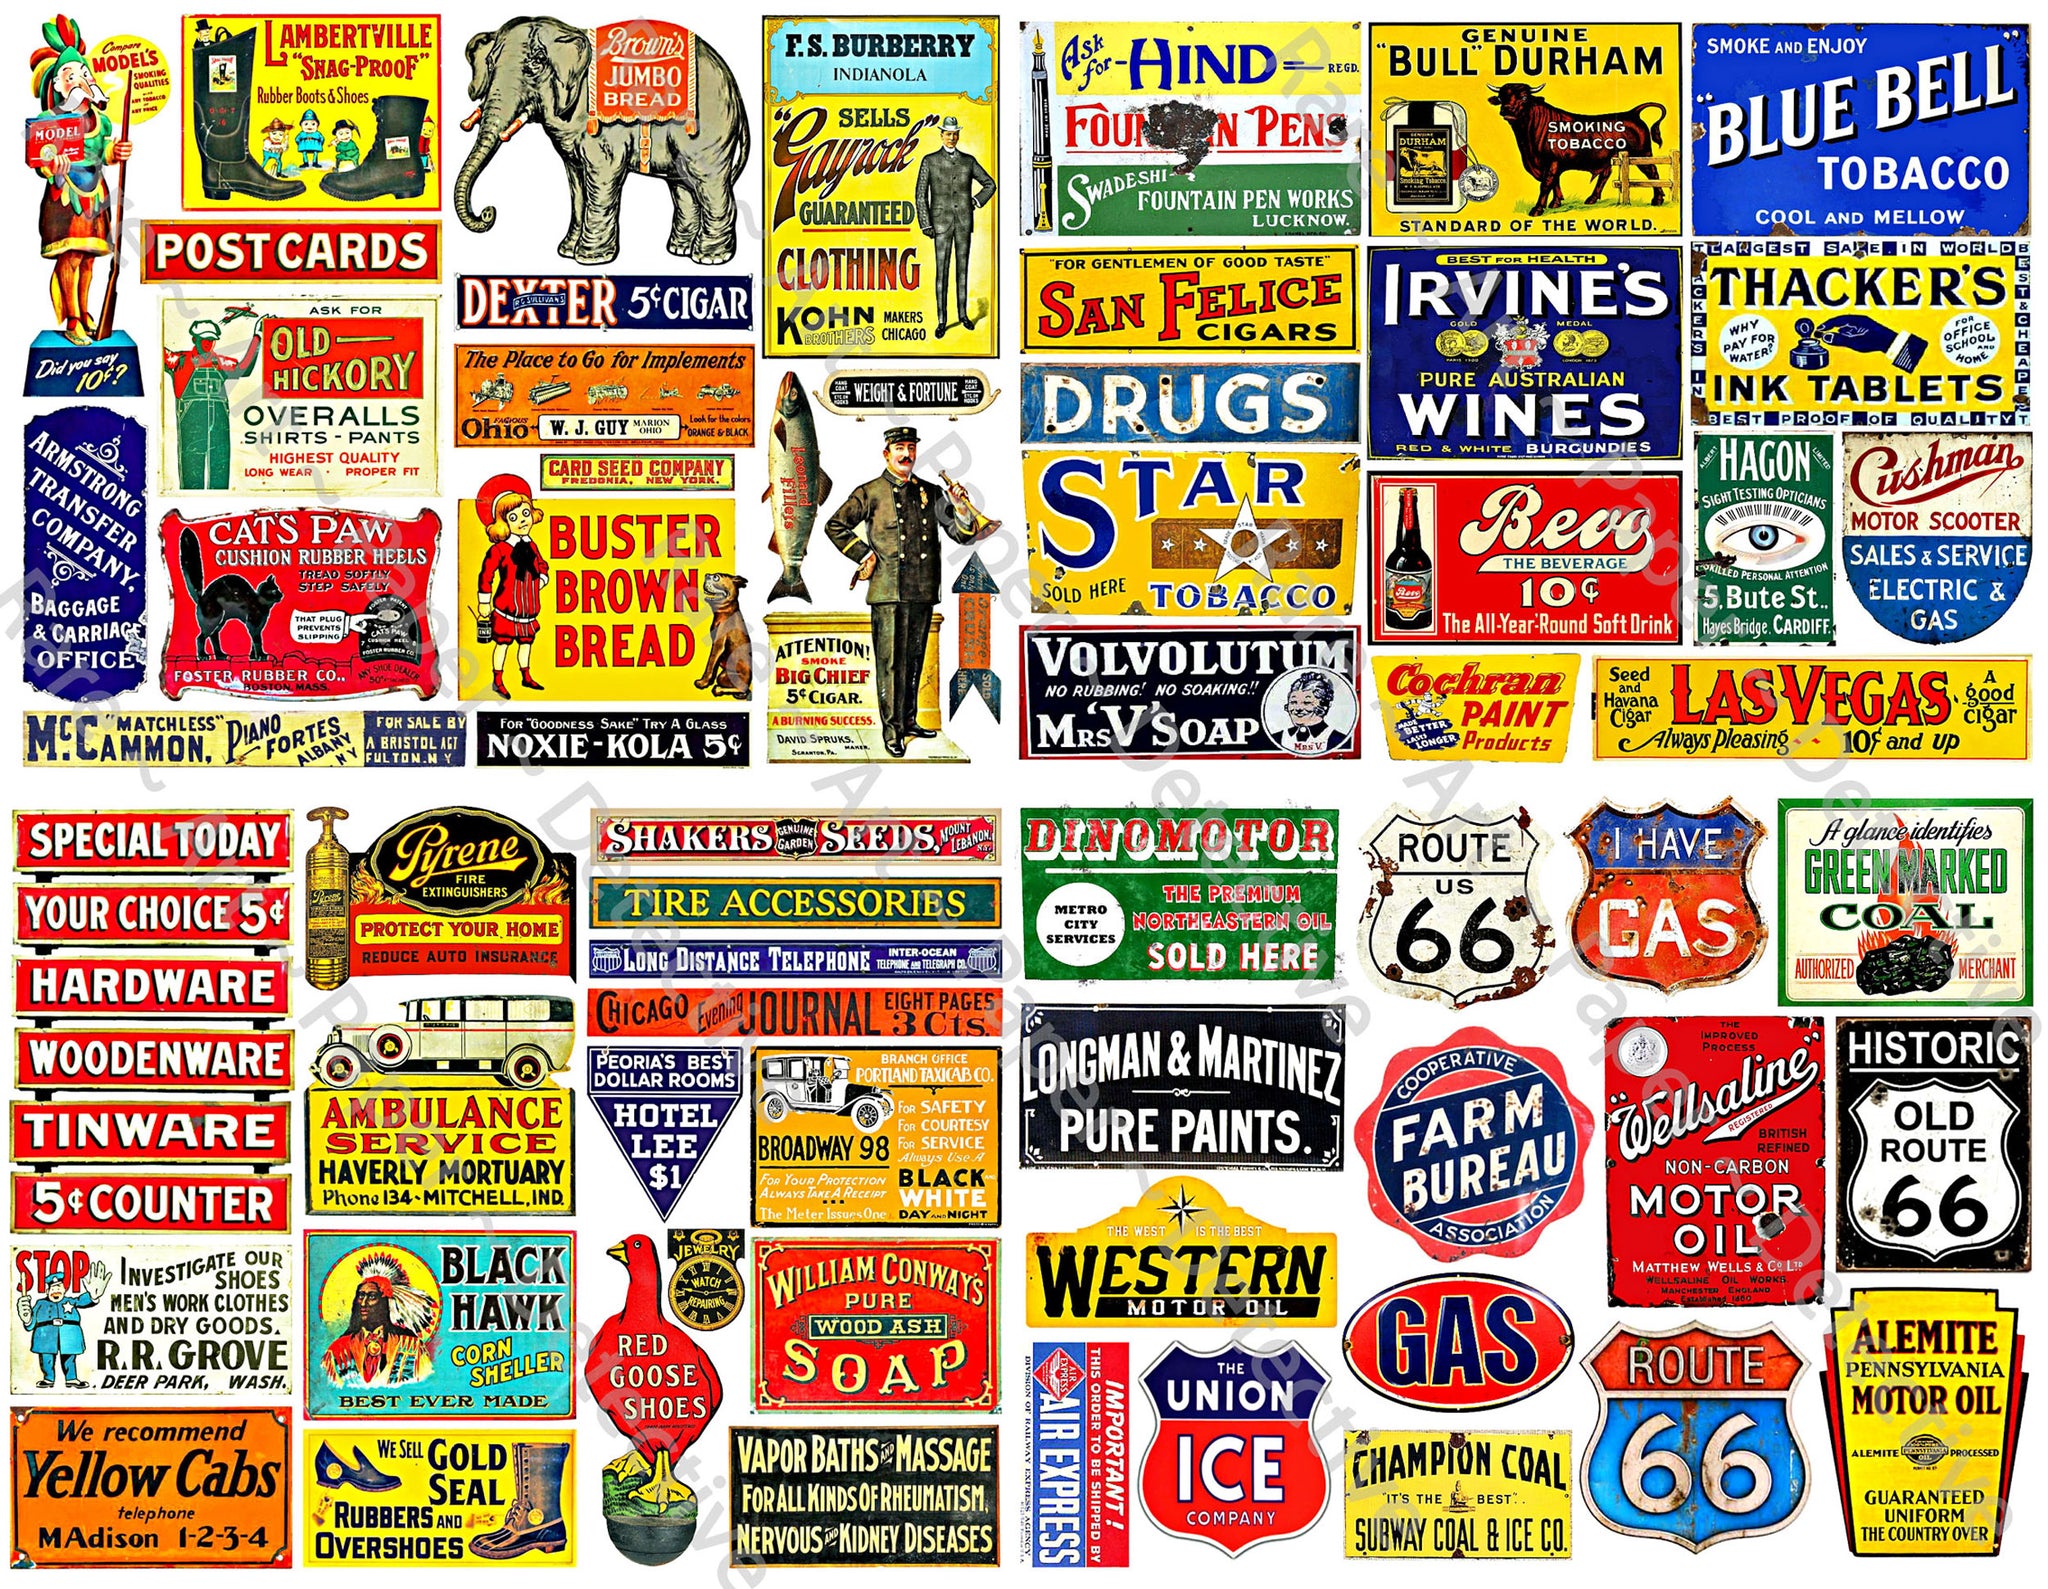 Model Train & Doll House Miniature Sign Stickers, 64 Pcs. Set, Rusty Metal Sign Illustrations, 8.5" x 11" Sheet, #796